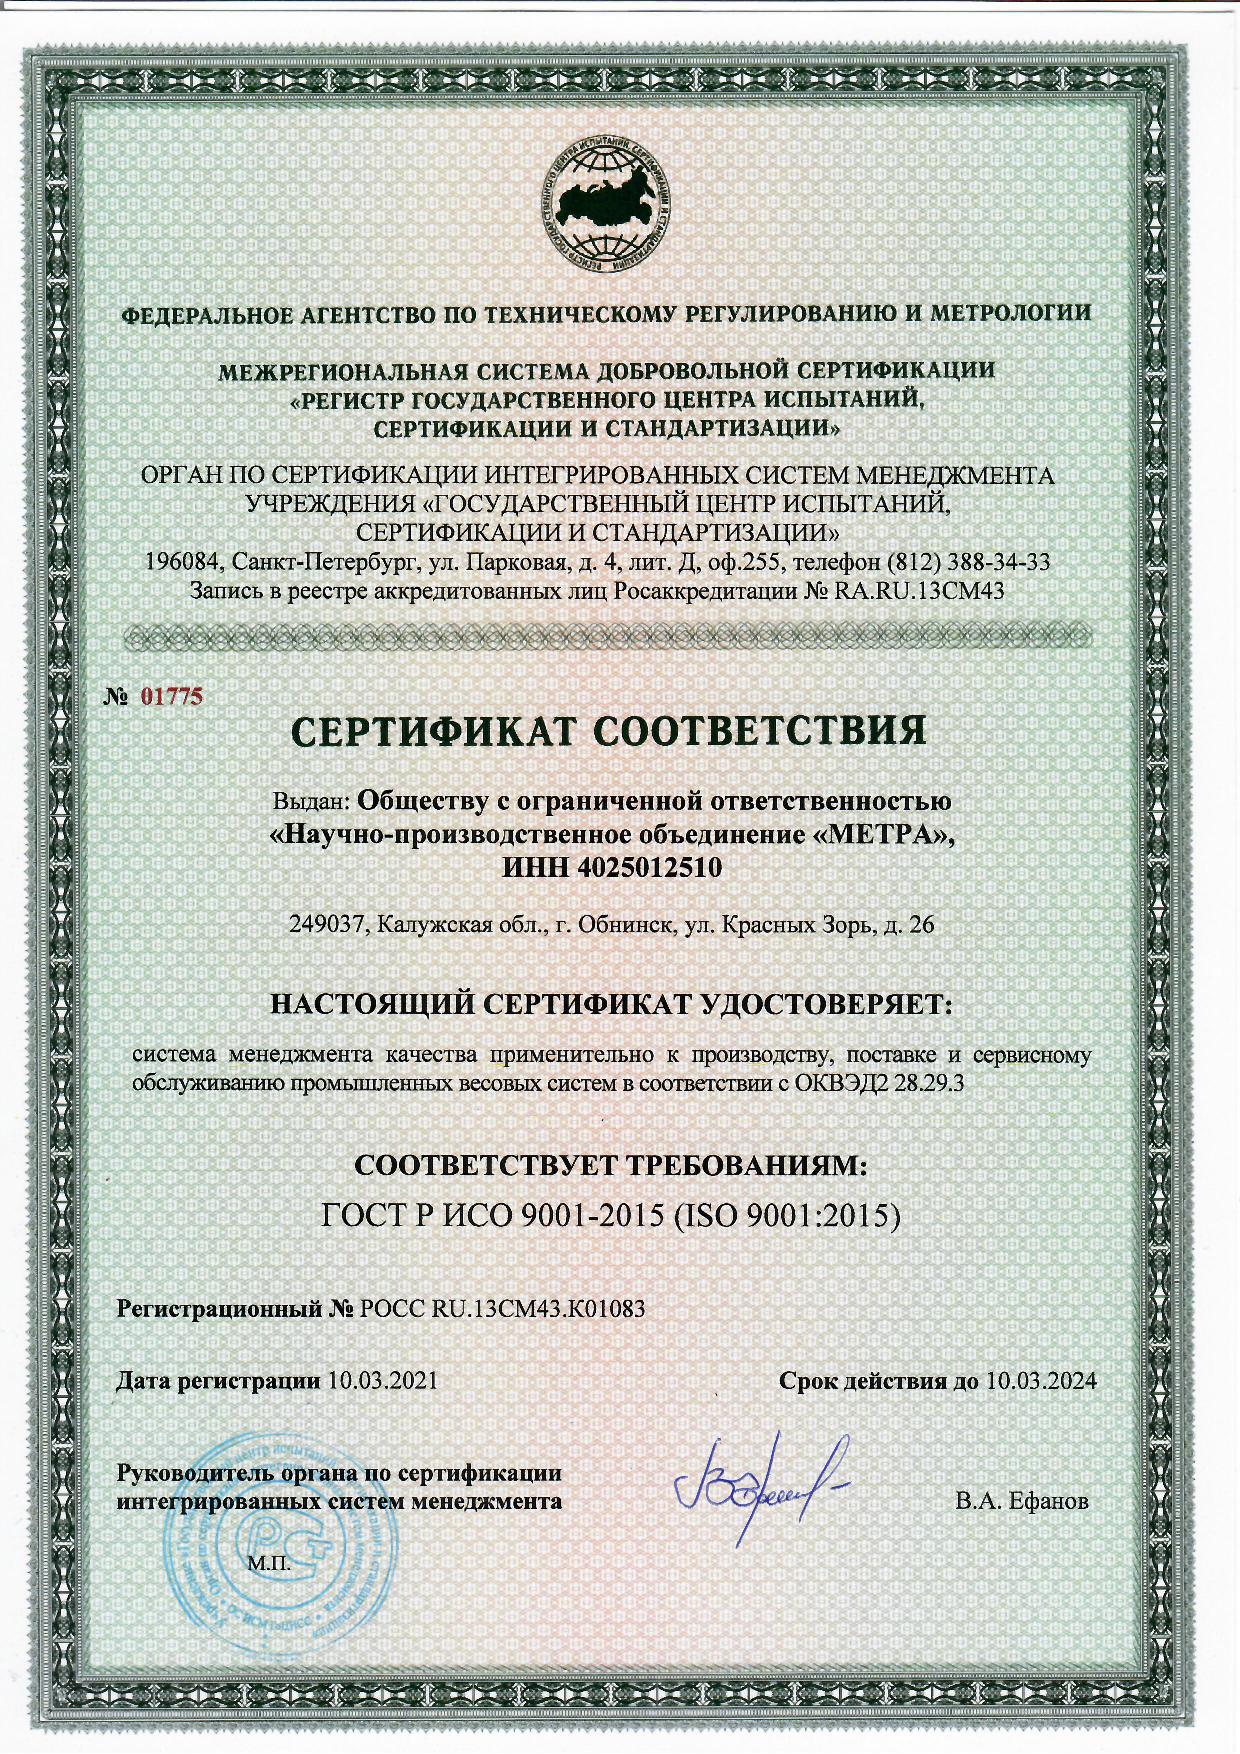 Сертификация систем менеджмента стандарт. ГОСТ Р ИСО 9001 ISO 9001 что это. Сертификат ГОСТ Р ИСО 9001-2015. Сертификат СМК ISO 9001. Сертификат системы менеджмента качества СМК стандарта ISO 9001.